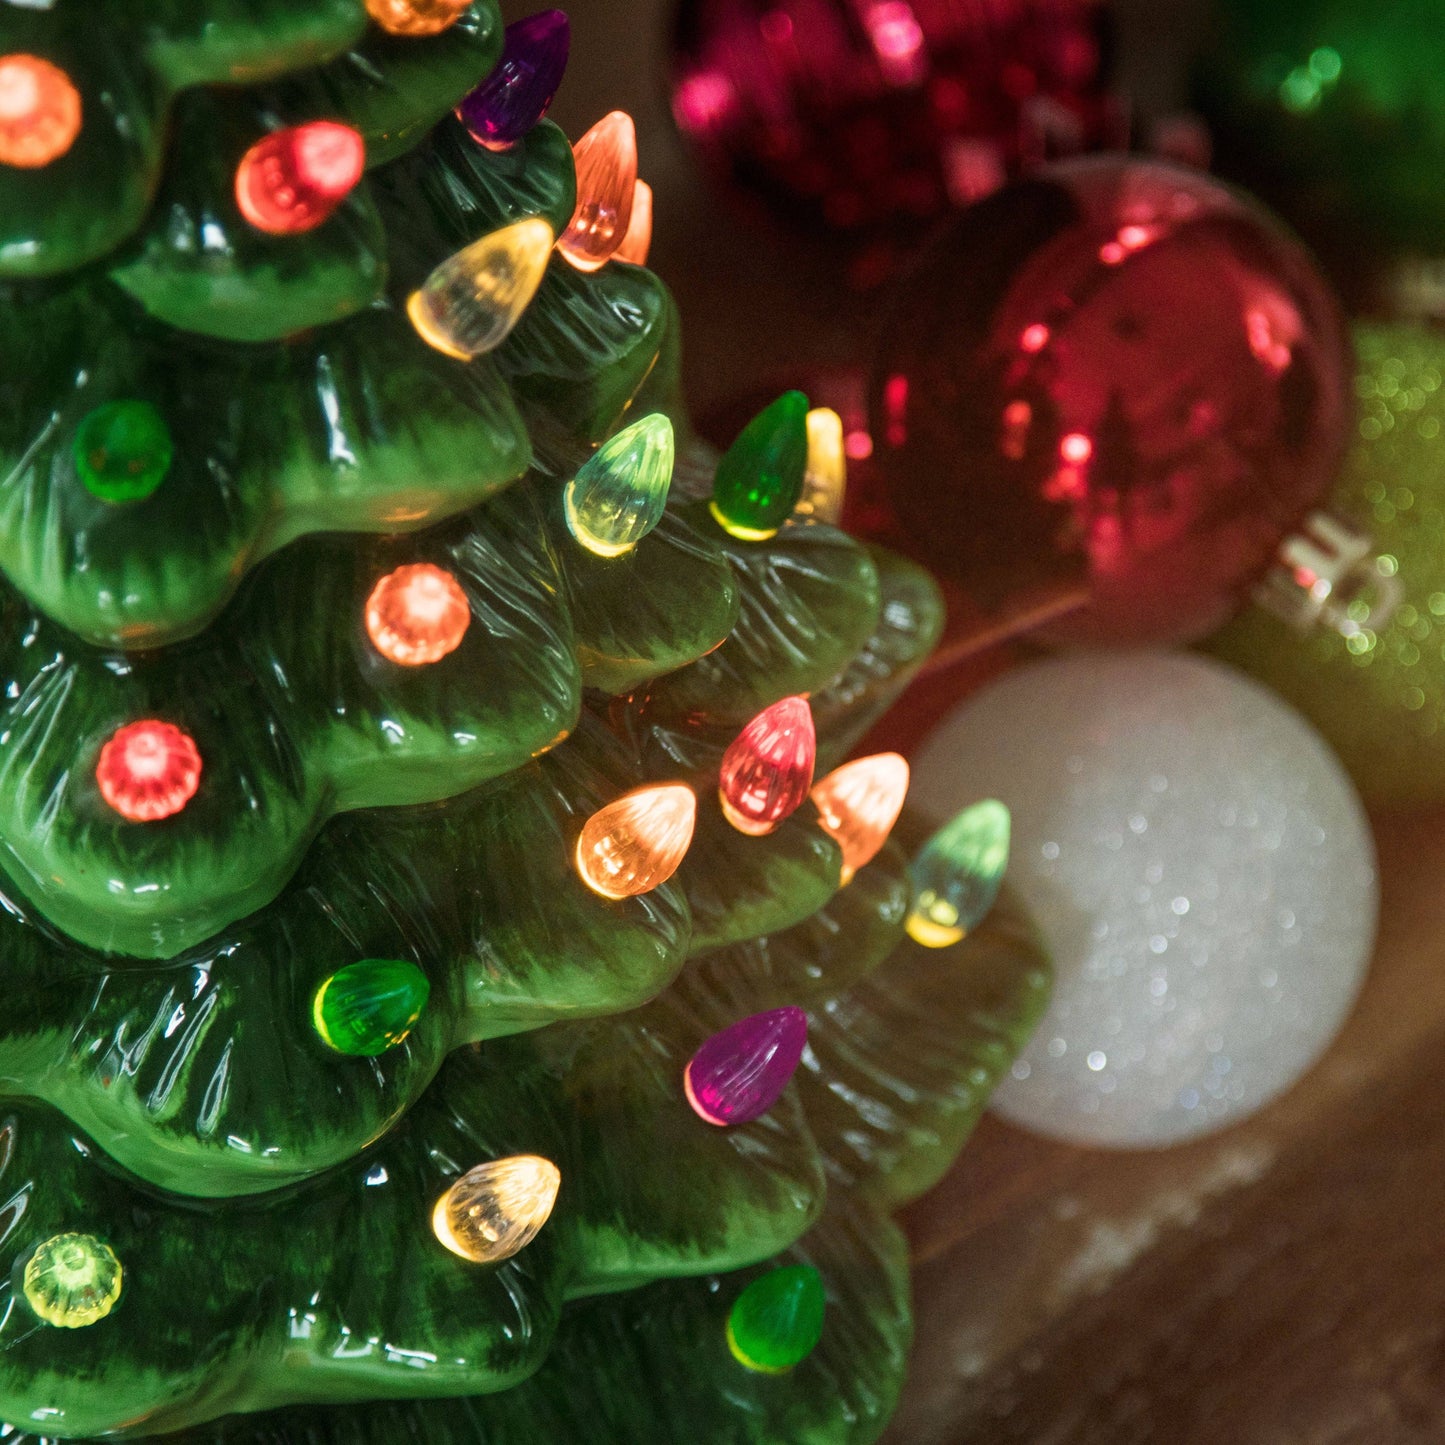 Green Ceramic Christmas Tree - 15-Inch: RJ-CER-GRN-L